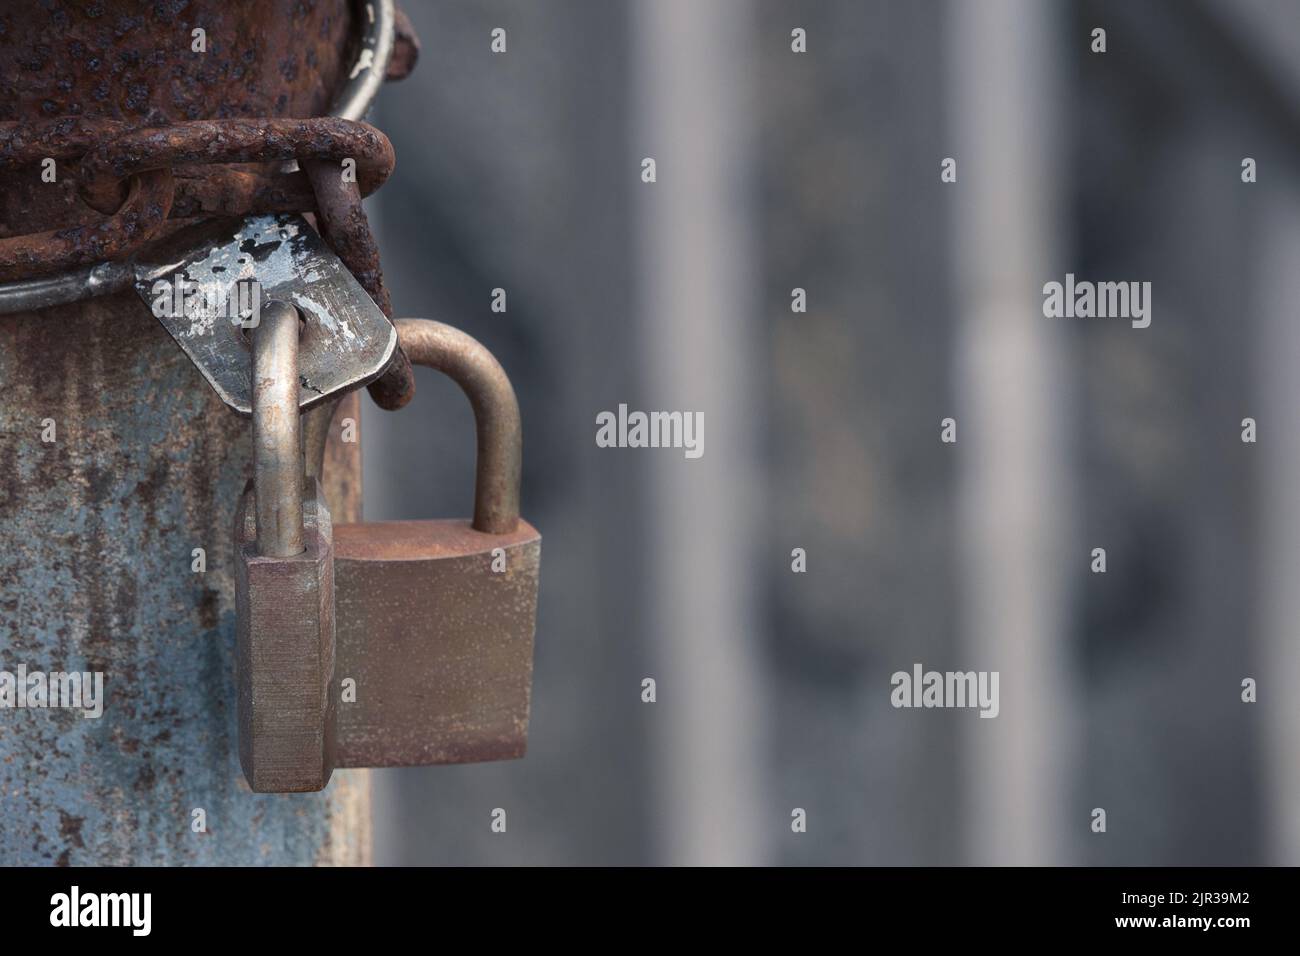 Two locked padlocks and cage bars Stock Photo